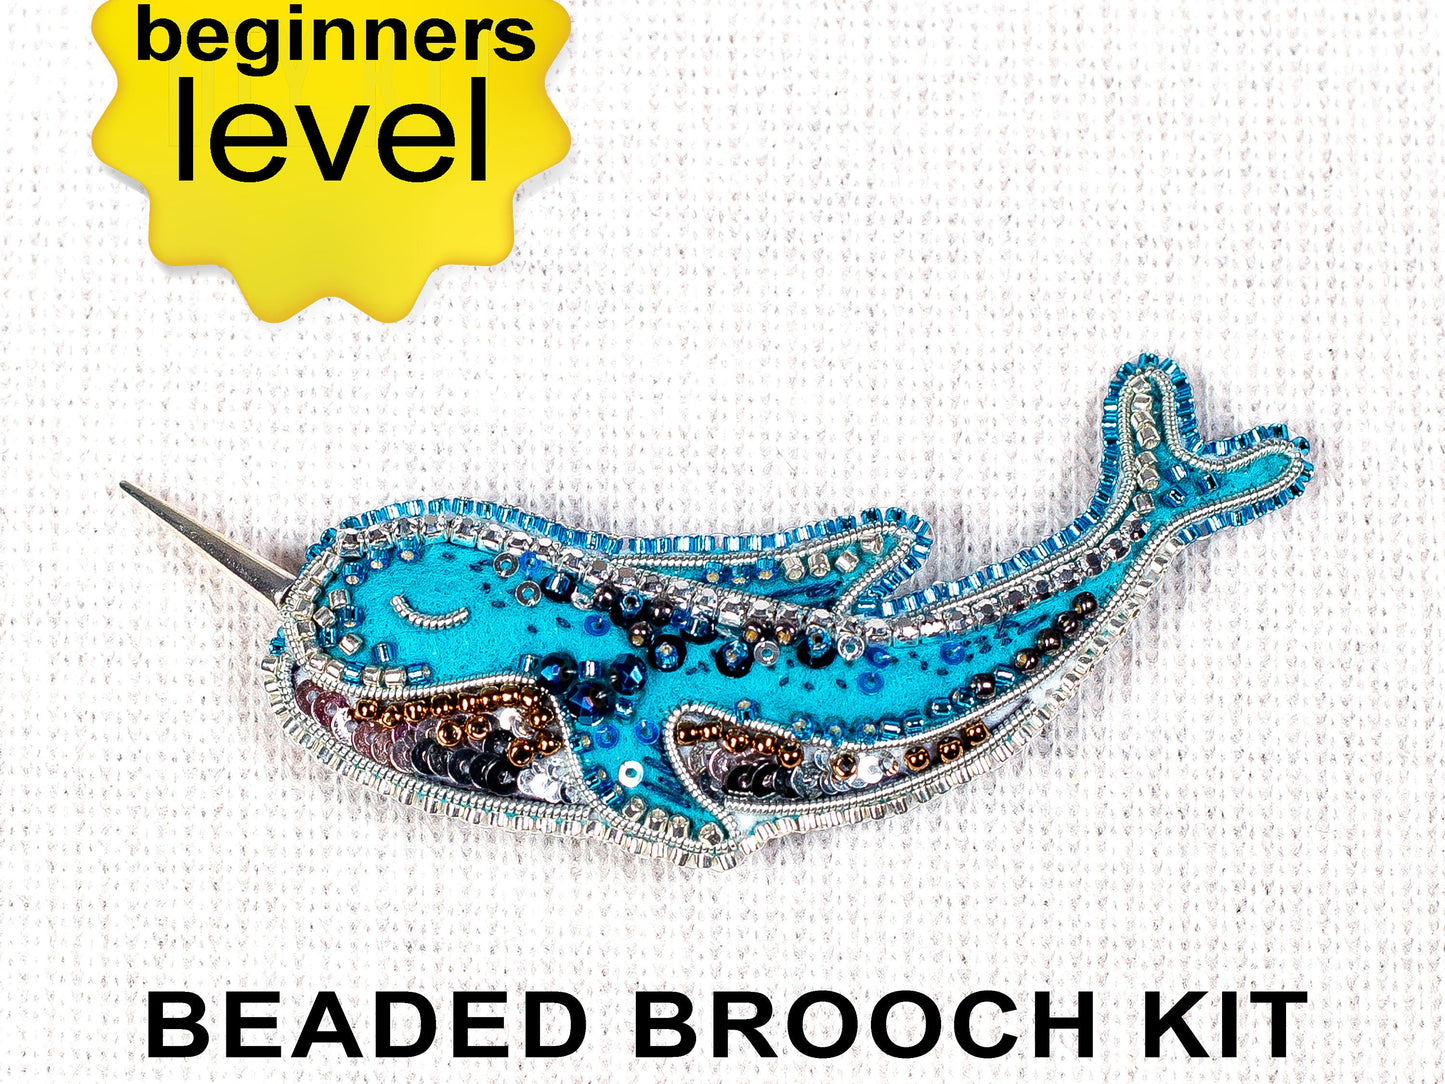 Blue Narwhale Bead embroidery kit. Seed Bead Brooch kit. DIY Craft kit. Beadweaving Kit. Needlework beading. Handmade Jewelry Making Kit